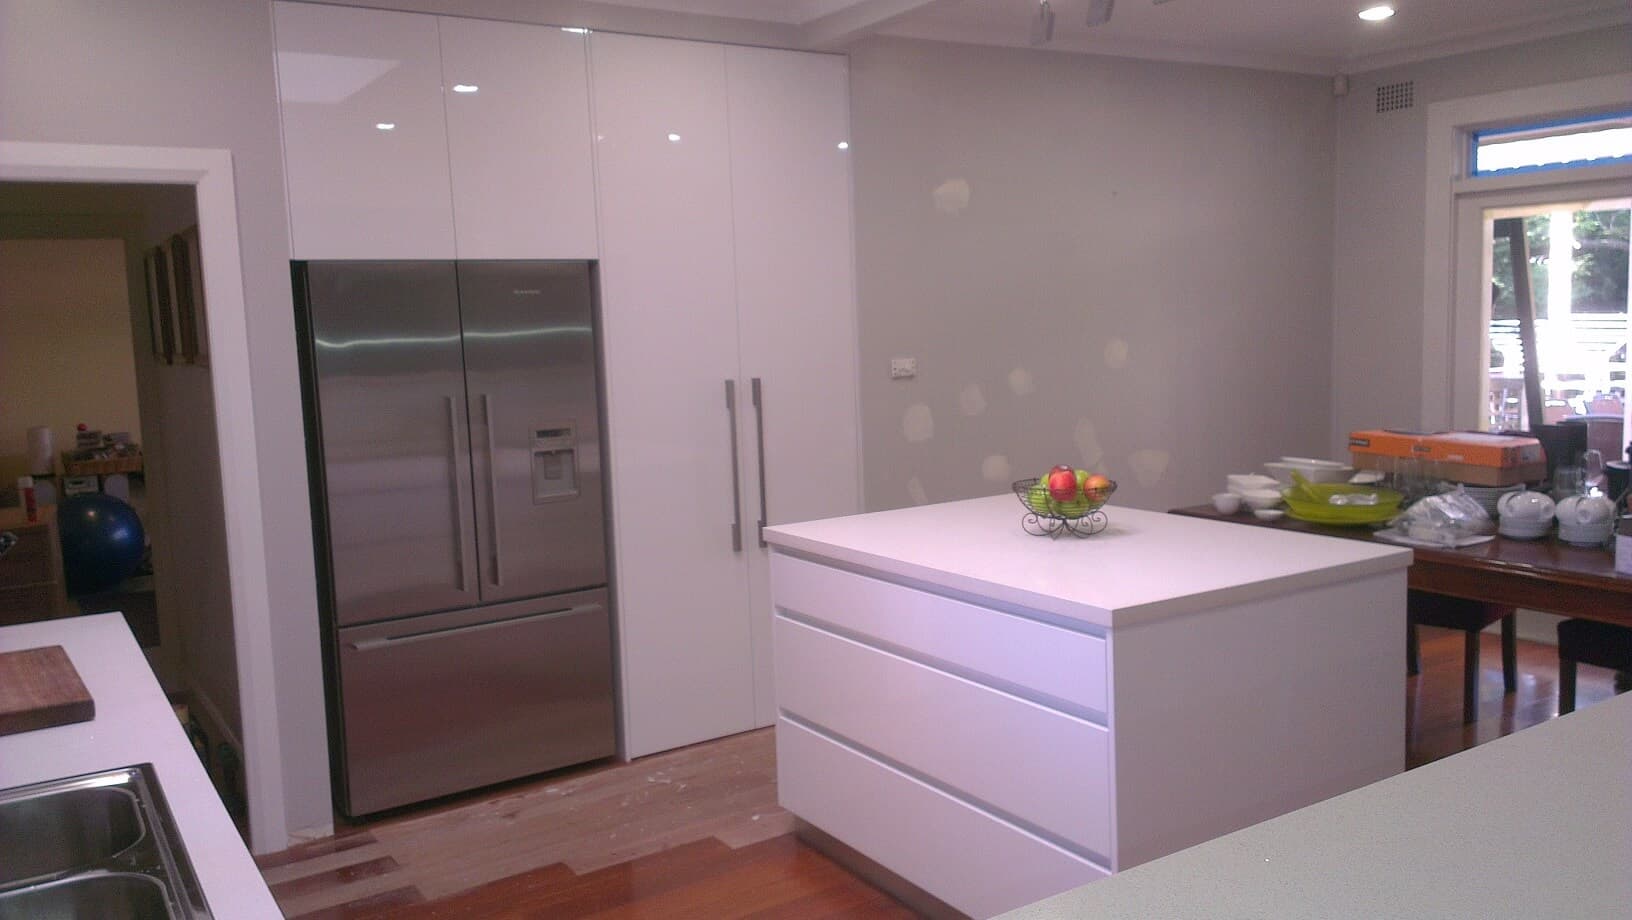 New Kitchen Beecroft Sydney Image 3 